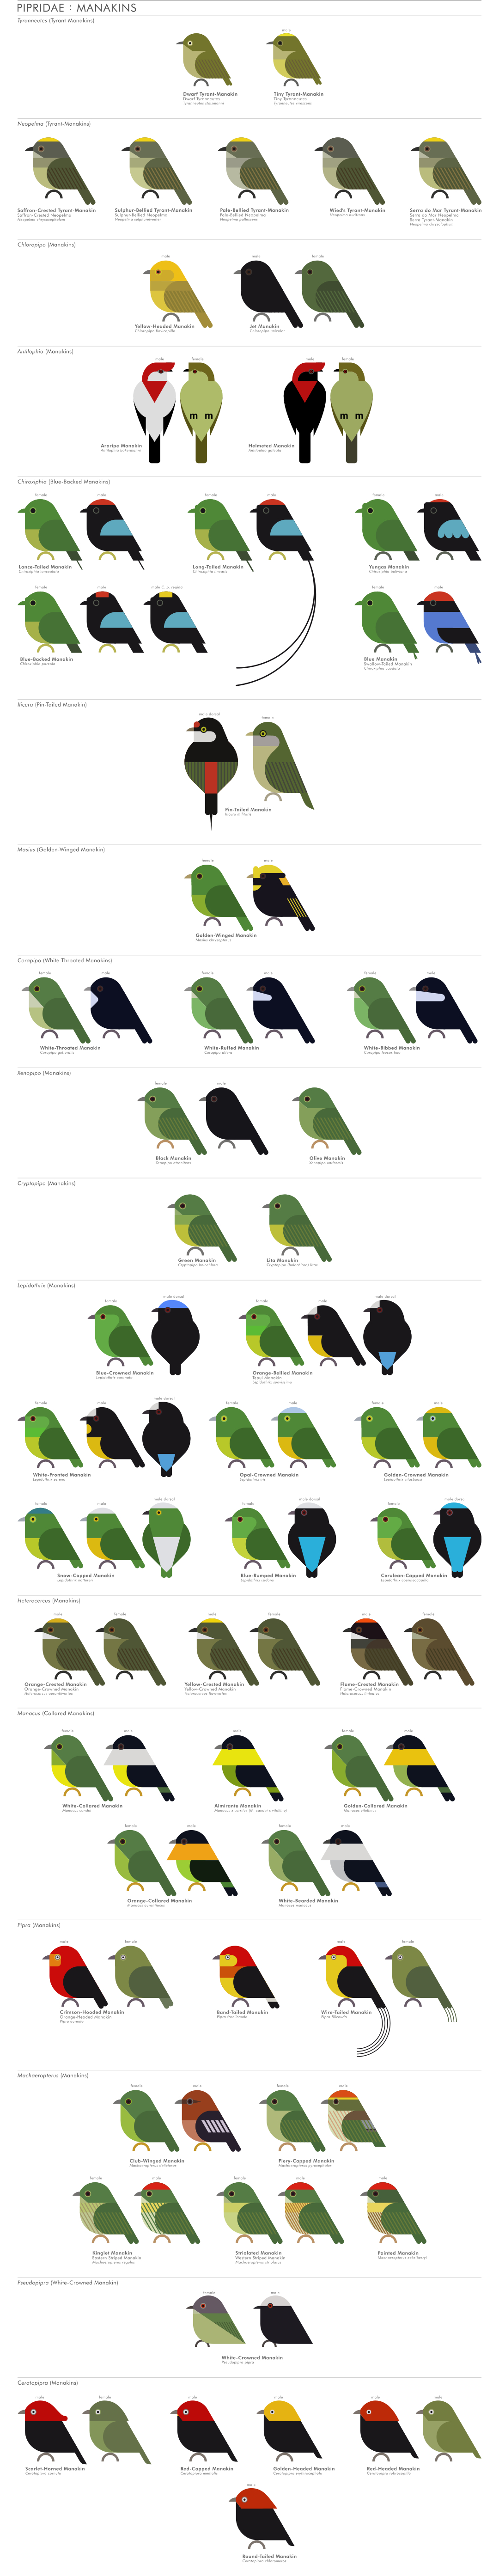 scott partridge - AVE - avian vector encyclopedia - manakins - bird vector art